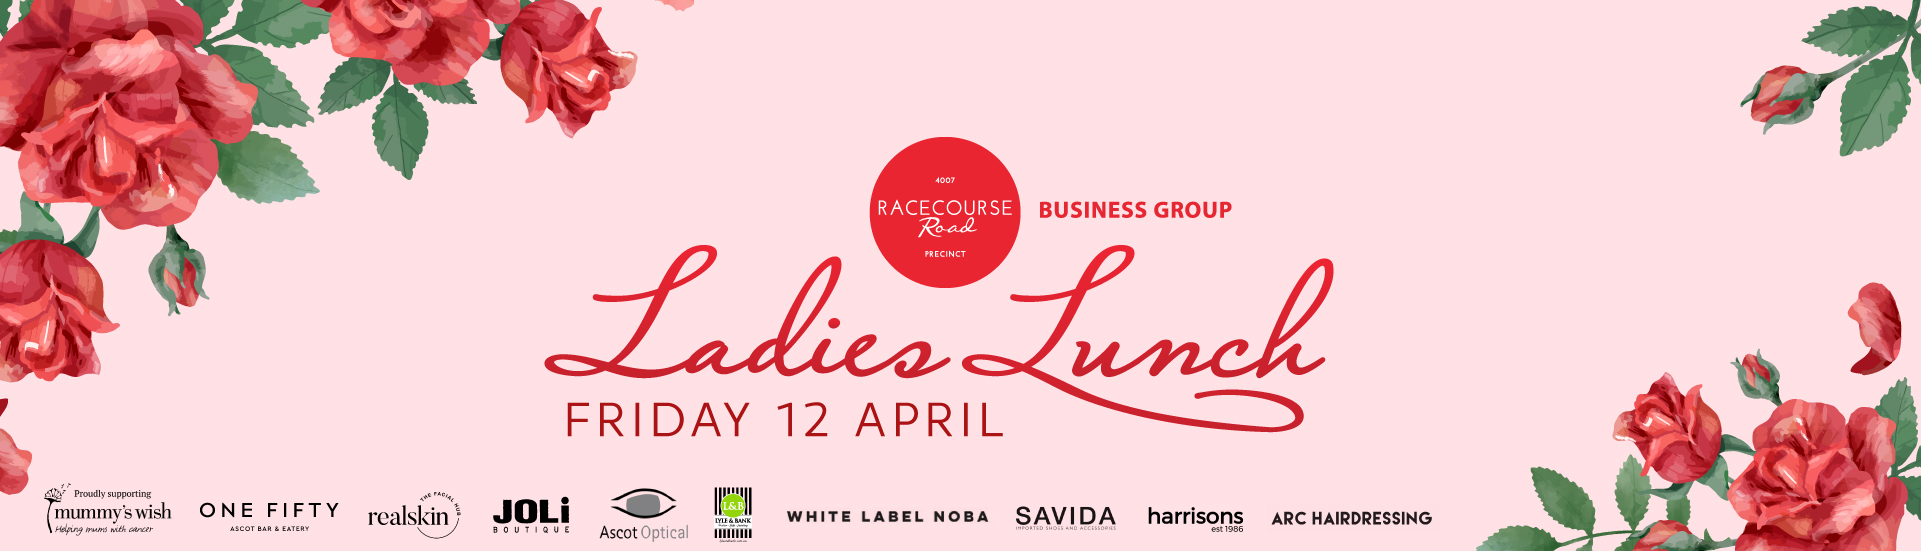 Racecourse Road Business Group Ladies Lunch | Brisbane Racing Club